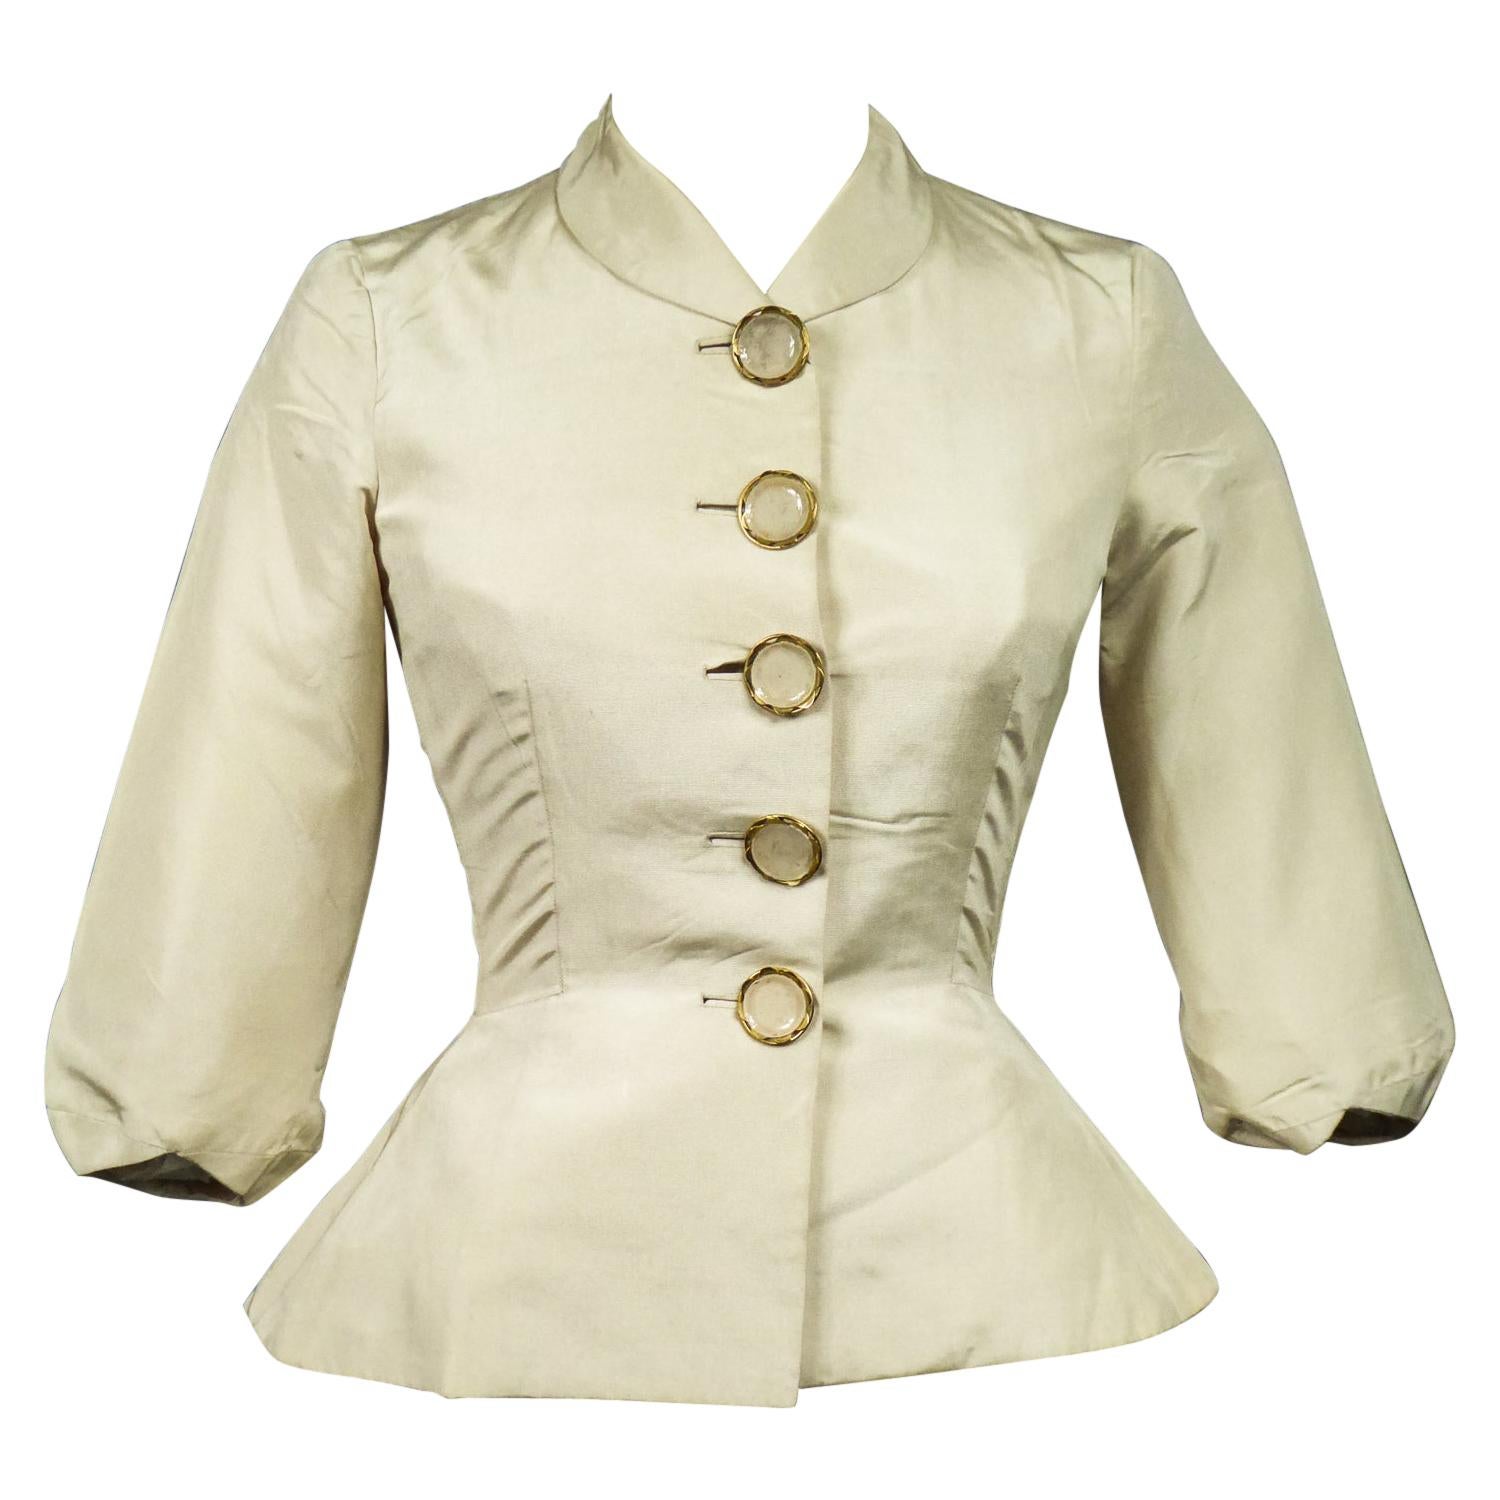 An Elsa Schiaparelli Bar Jacket in Cream Silk Numbered 89254 Circa 1947-1950